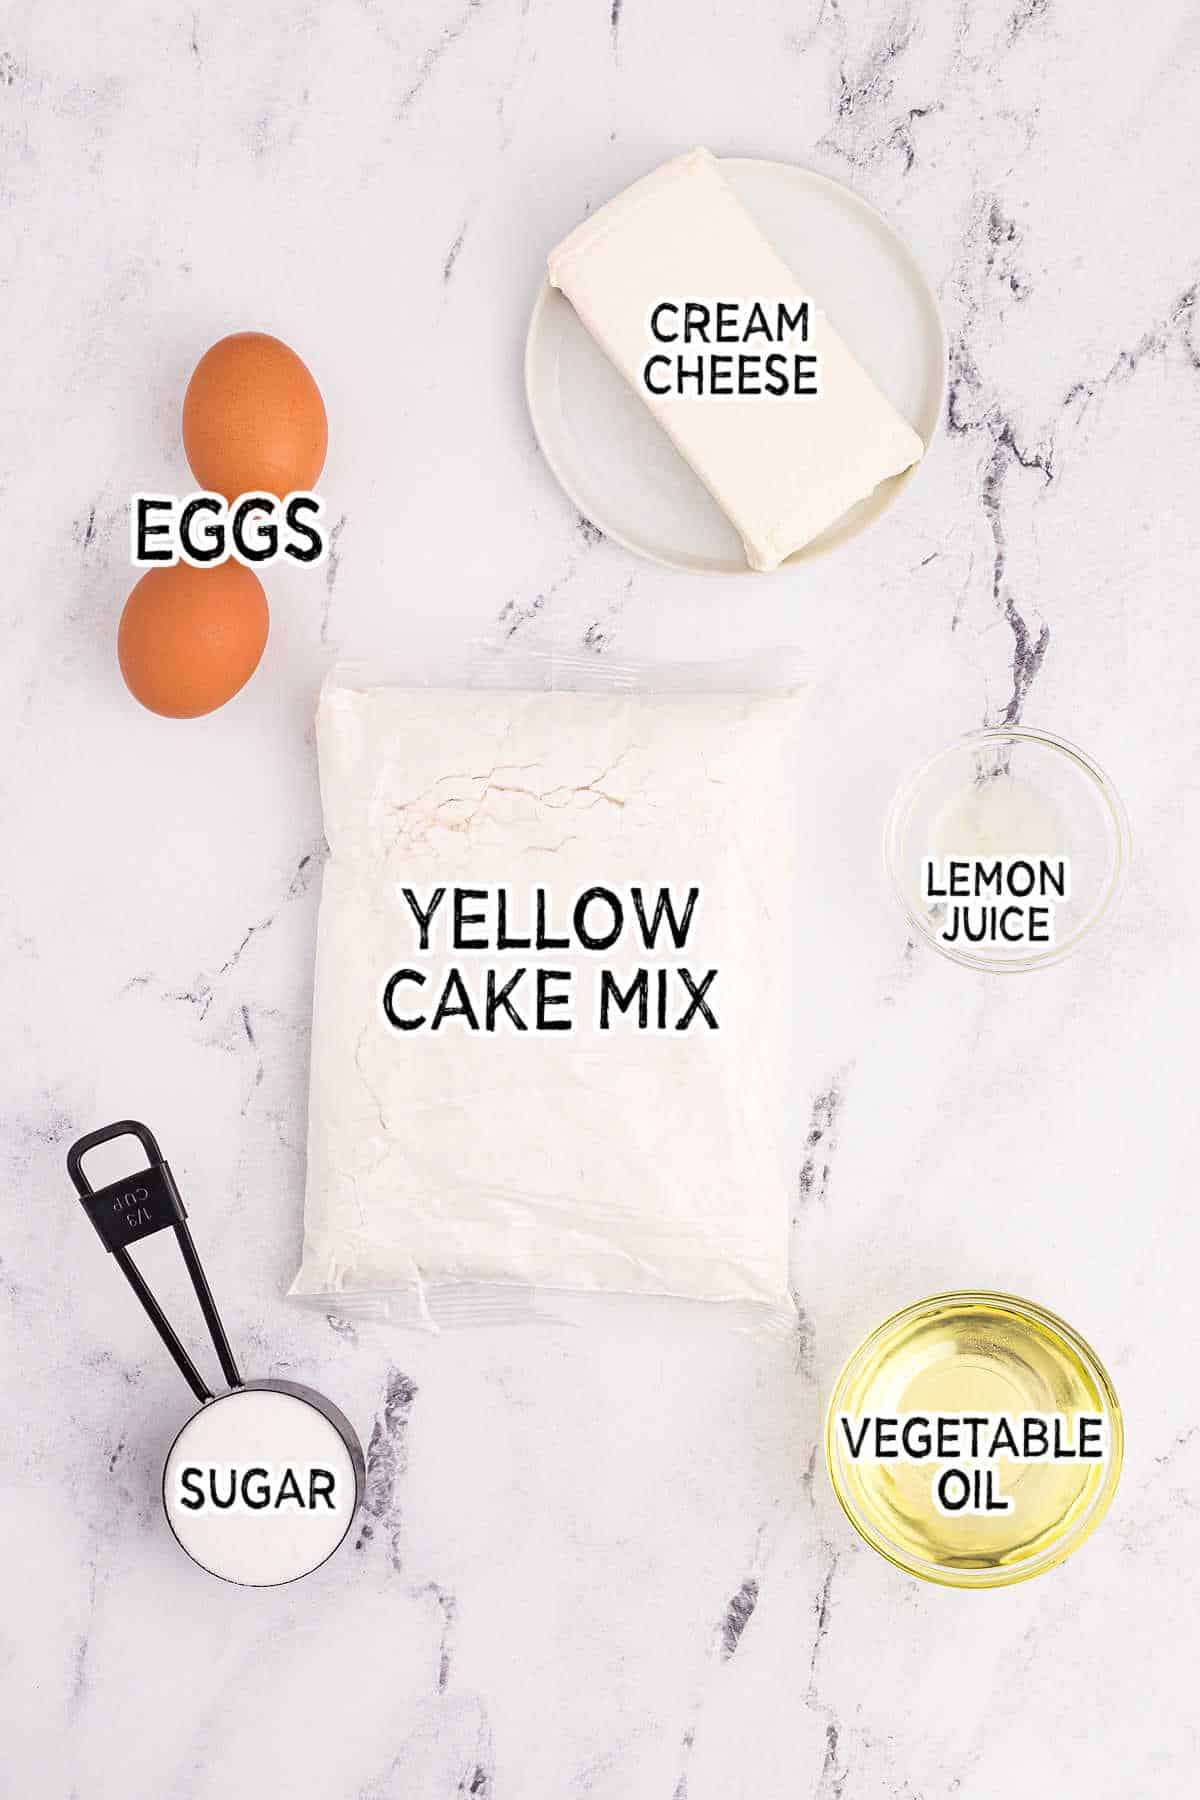 Ingredients to make lemon cheese bars.